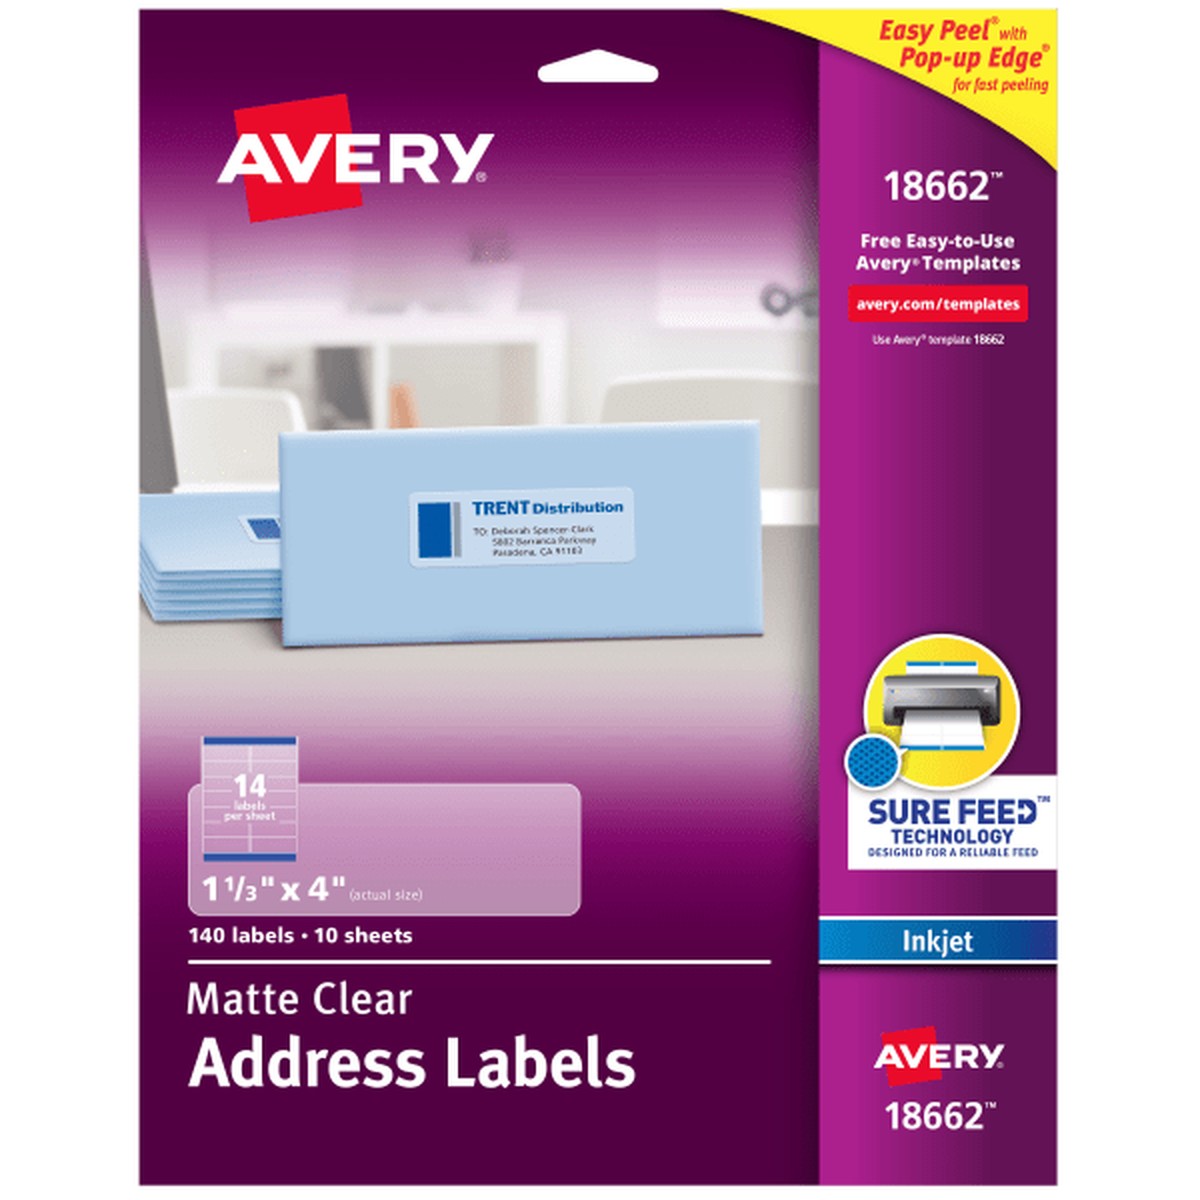 Avery Easy Peel Inkjet Printer Mailing Labels - 1 21/64" Width x 4" Length - Permanent Adhesive - Rectangle - Inkjet - Clea